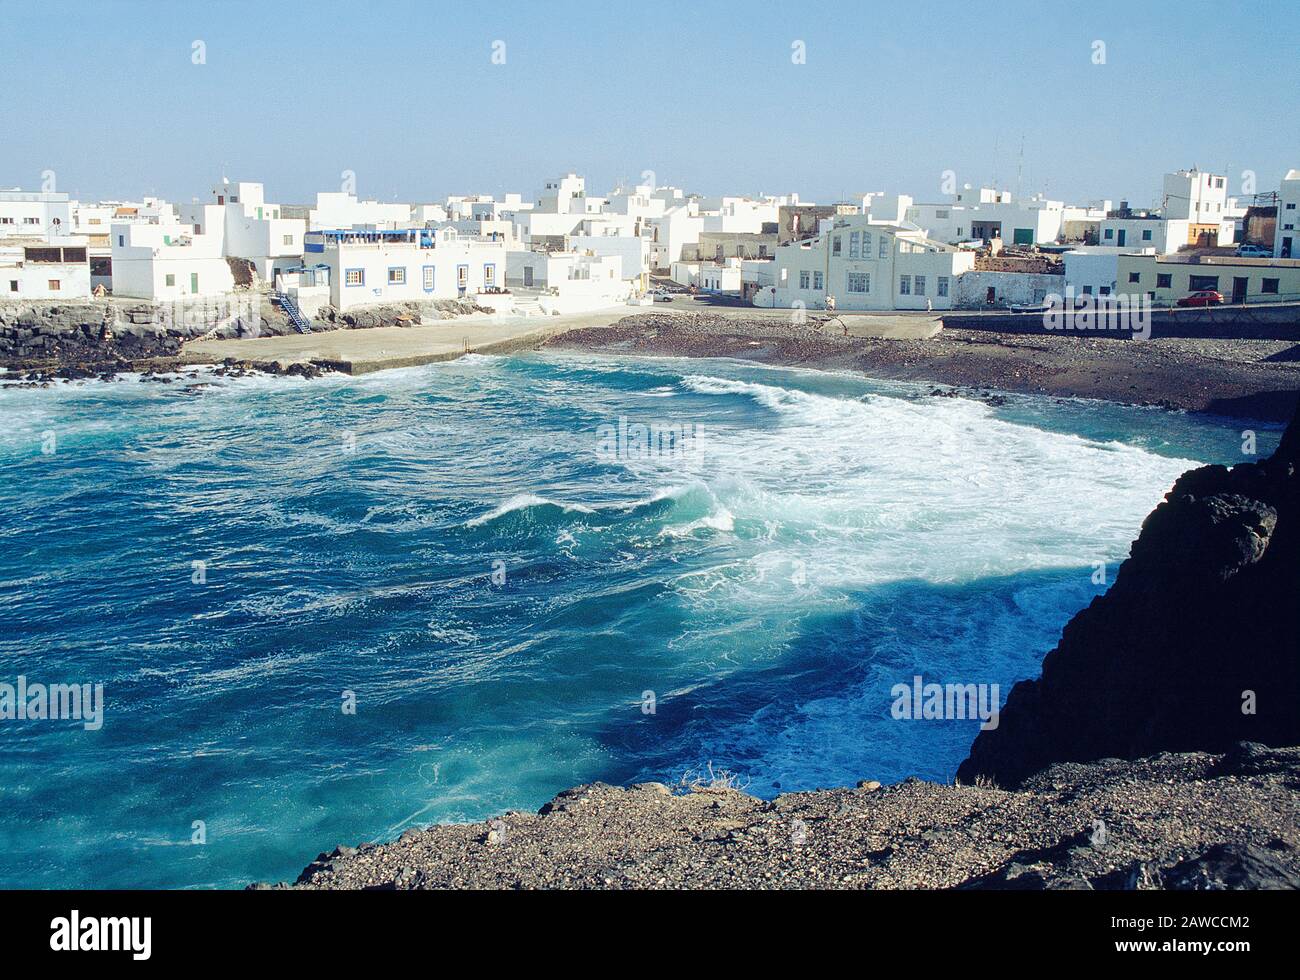 Overview. El Cotillo, Fuerteventura island, Canary Islands, Spain. Stock Photo